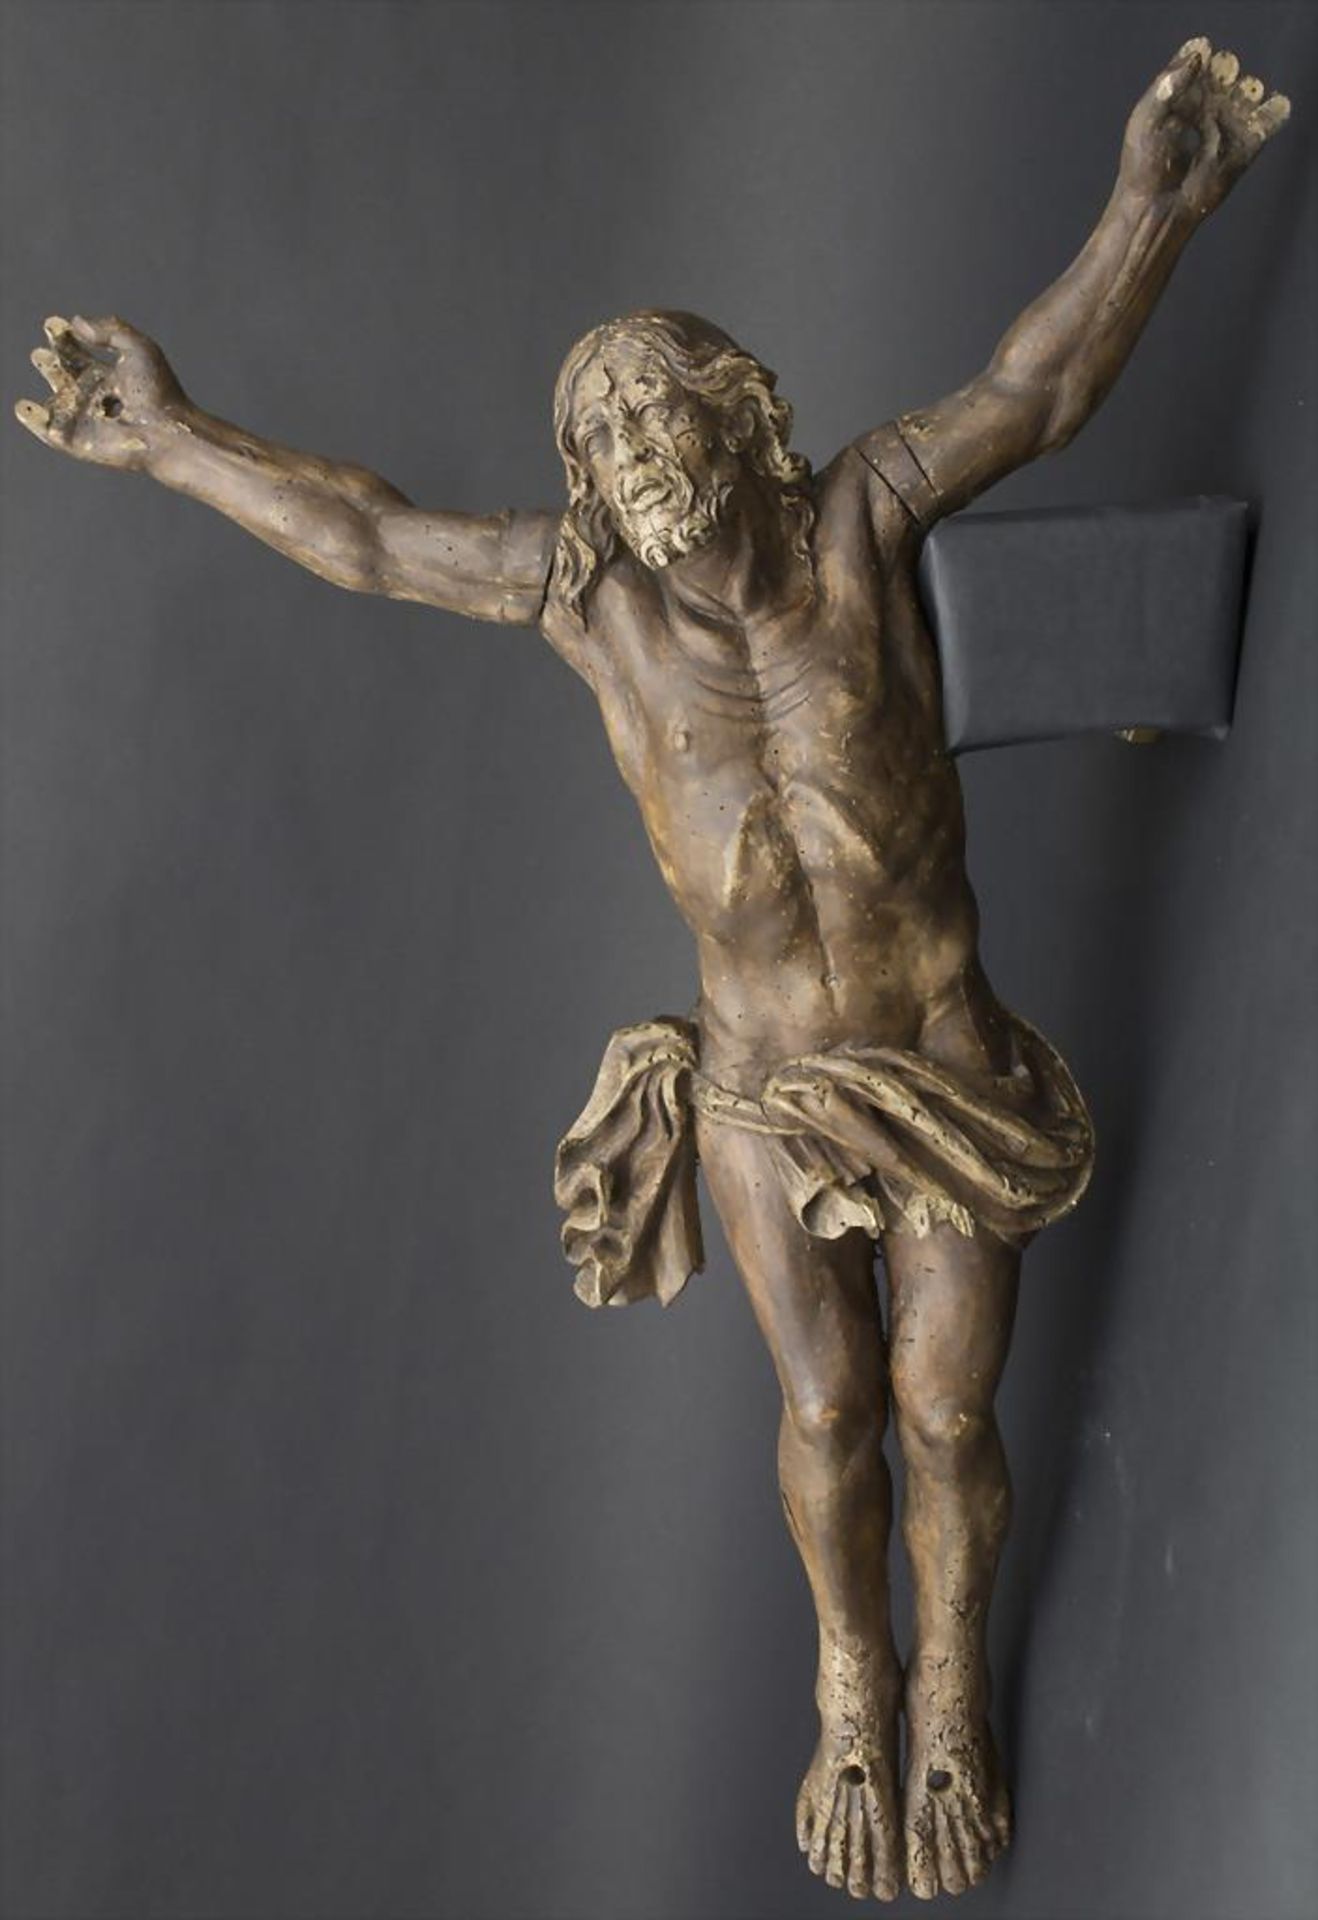 Holzskulptur 'Corpus Christi' / A wooden sculpture 'Corpus Christi', 16-17. Jh.